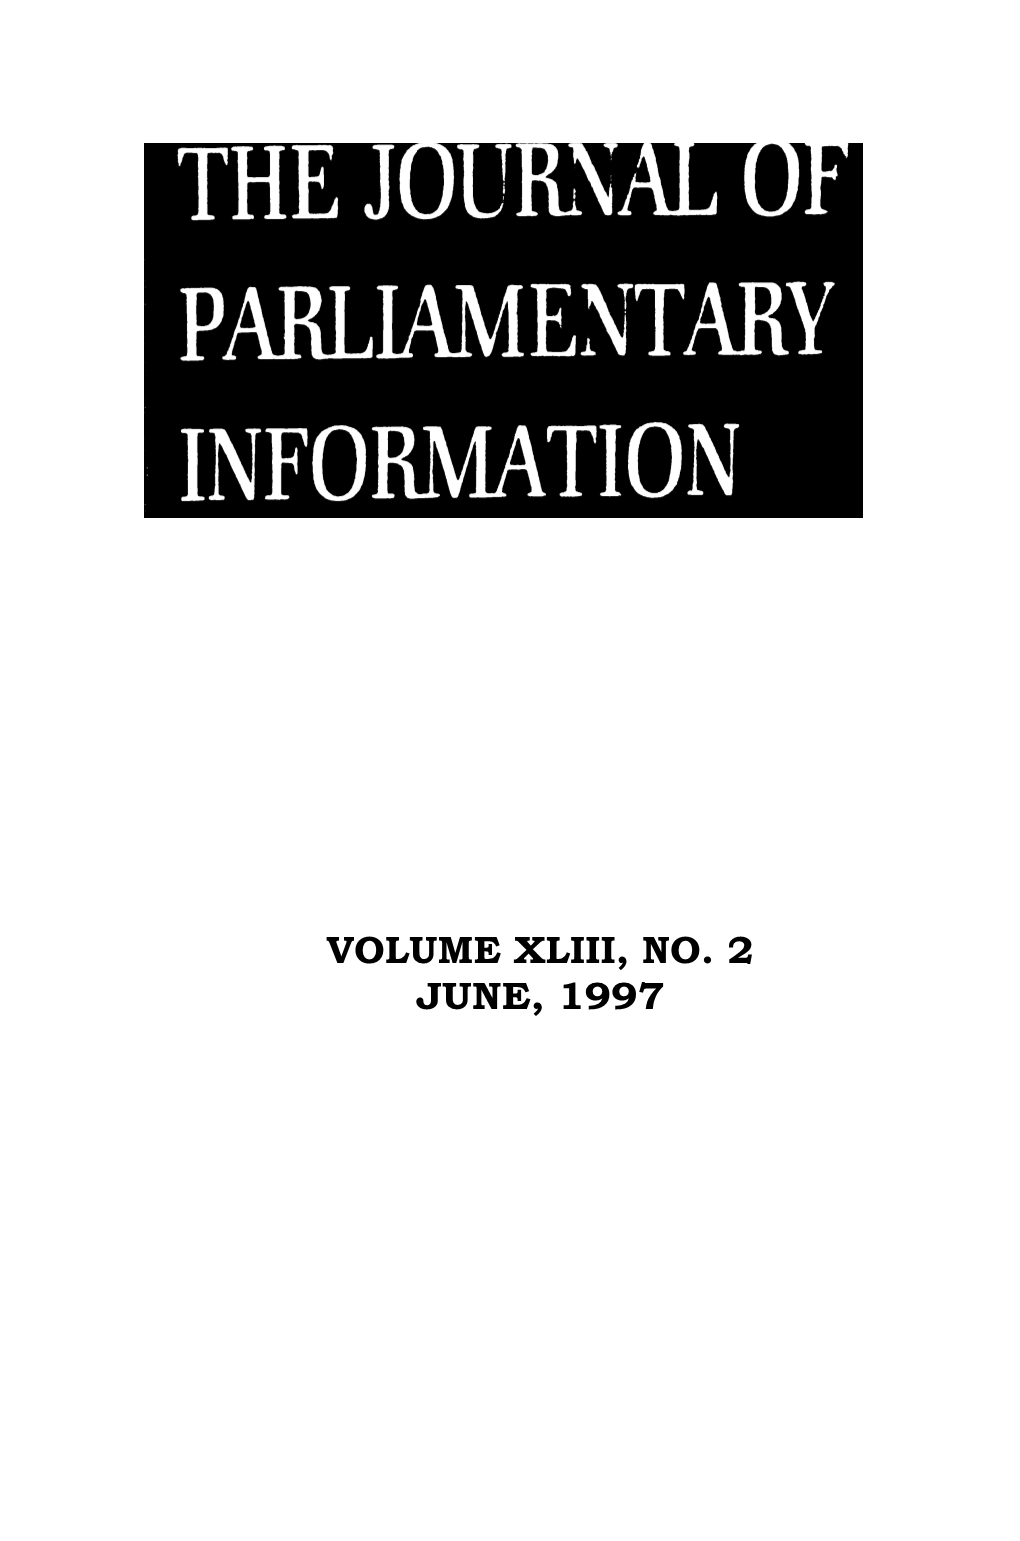 VOLUME XLIII, NO. 2 JUNE, 1997 Thejournalofparuamentaryinformation